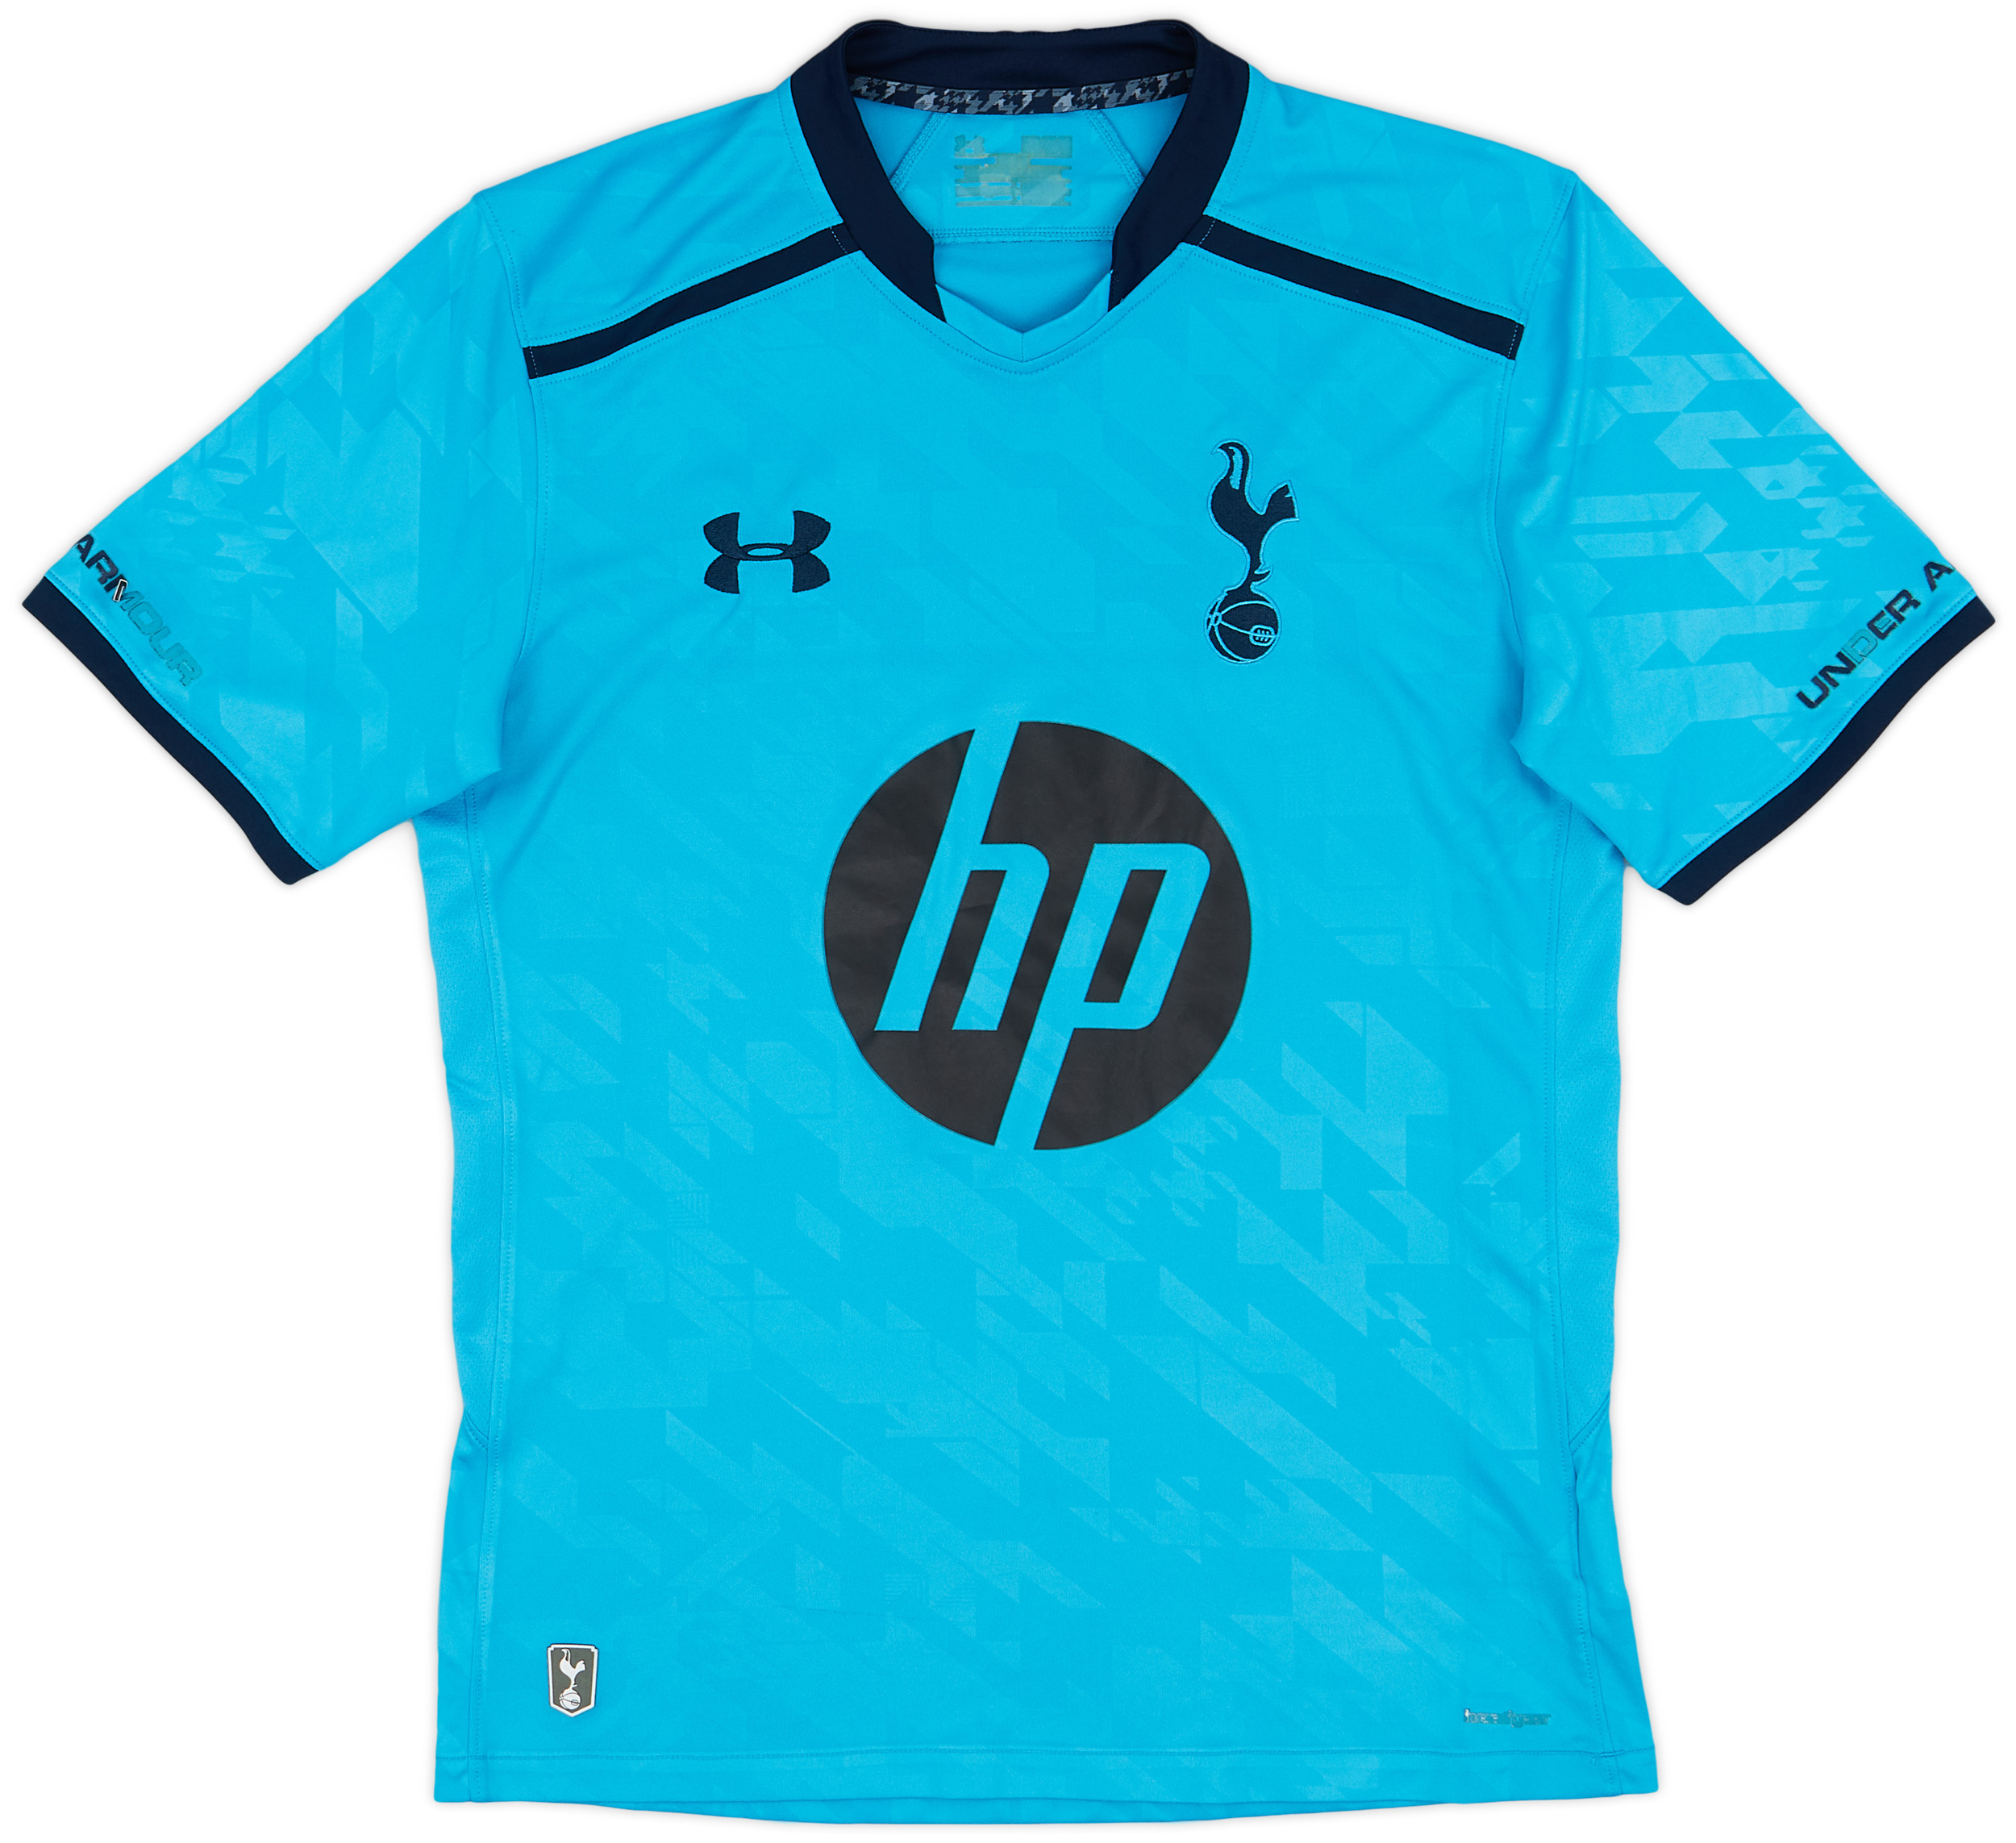 2013-14 Tottenham Hotspur Away Shirt - 6/10 - ()